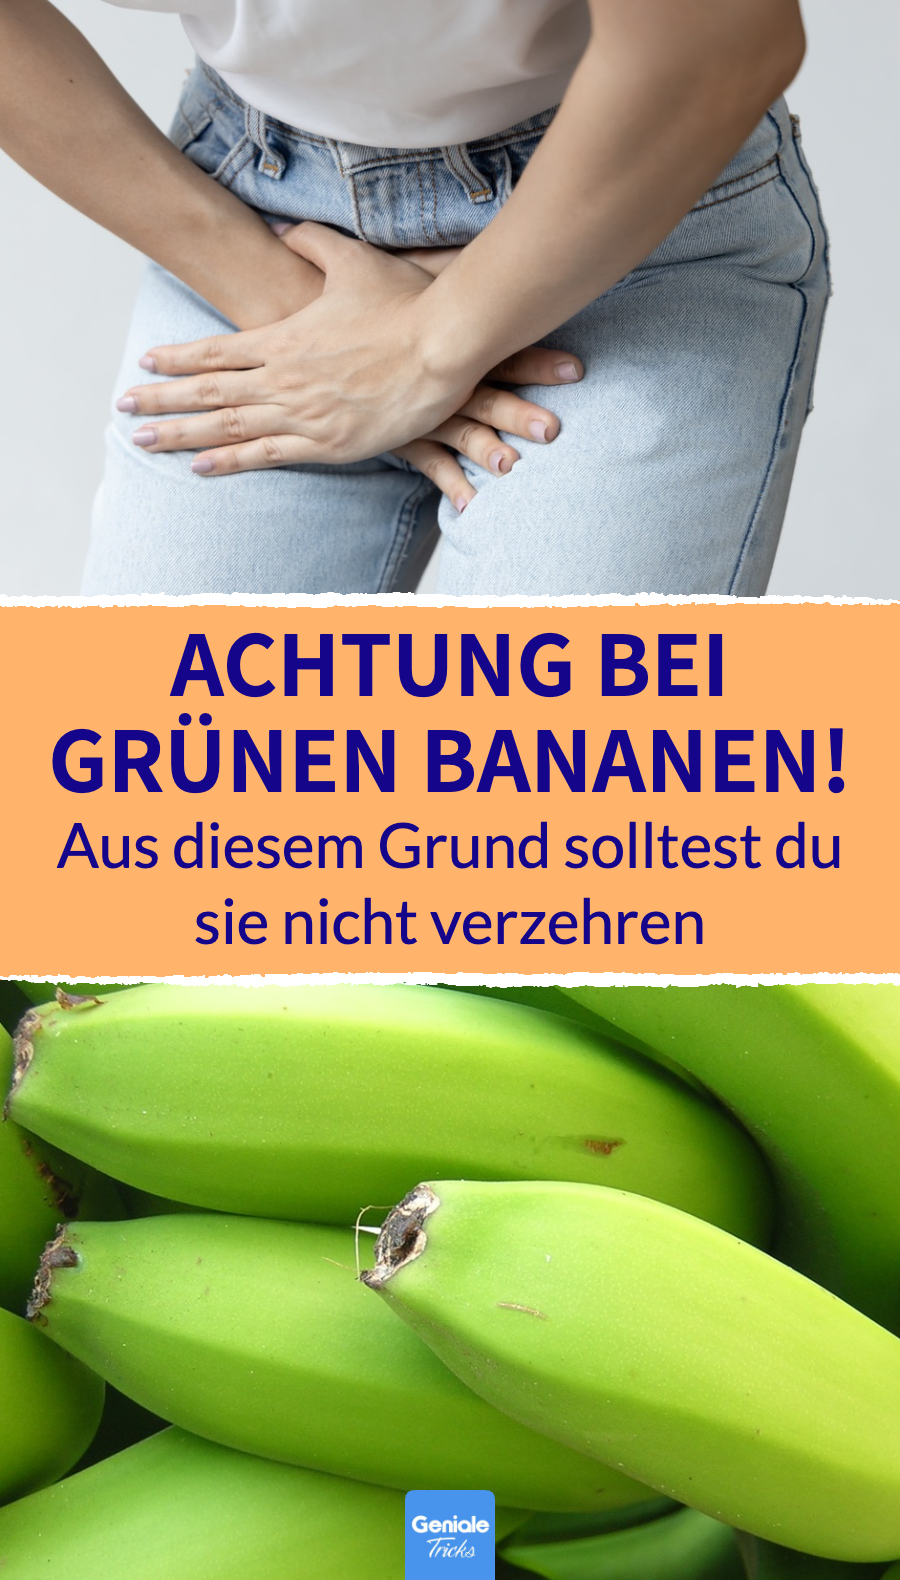 Das passiert, wenn du grüne Bananen isst